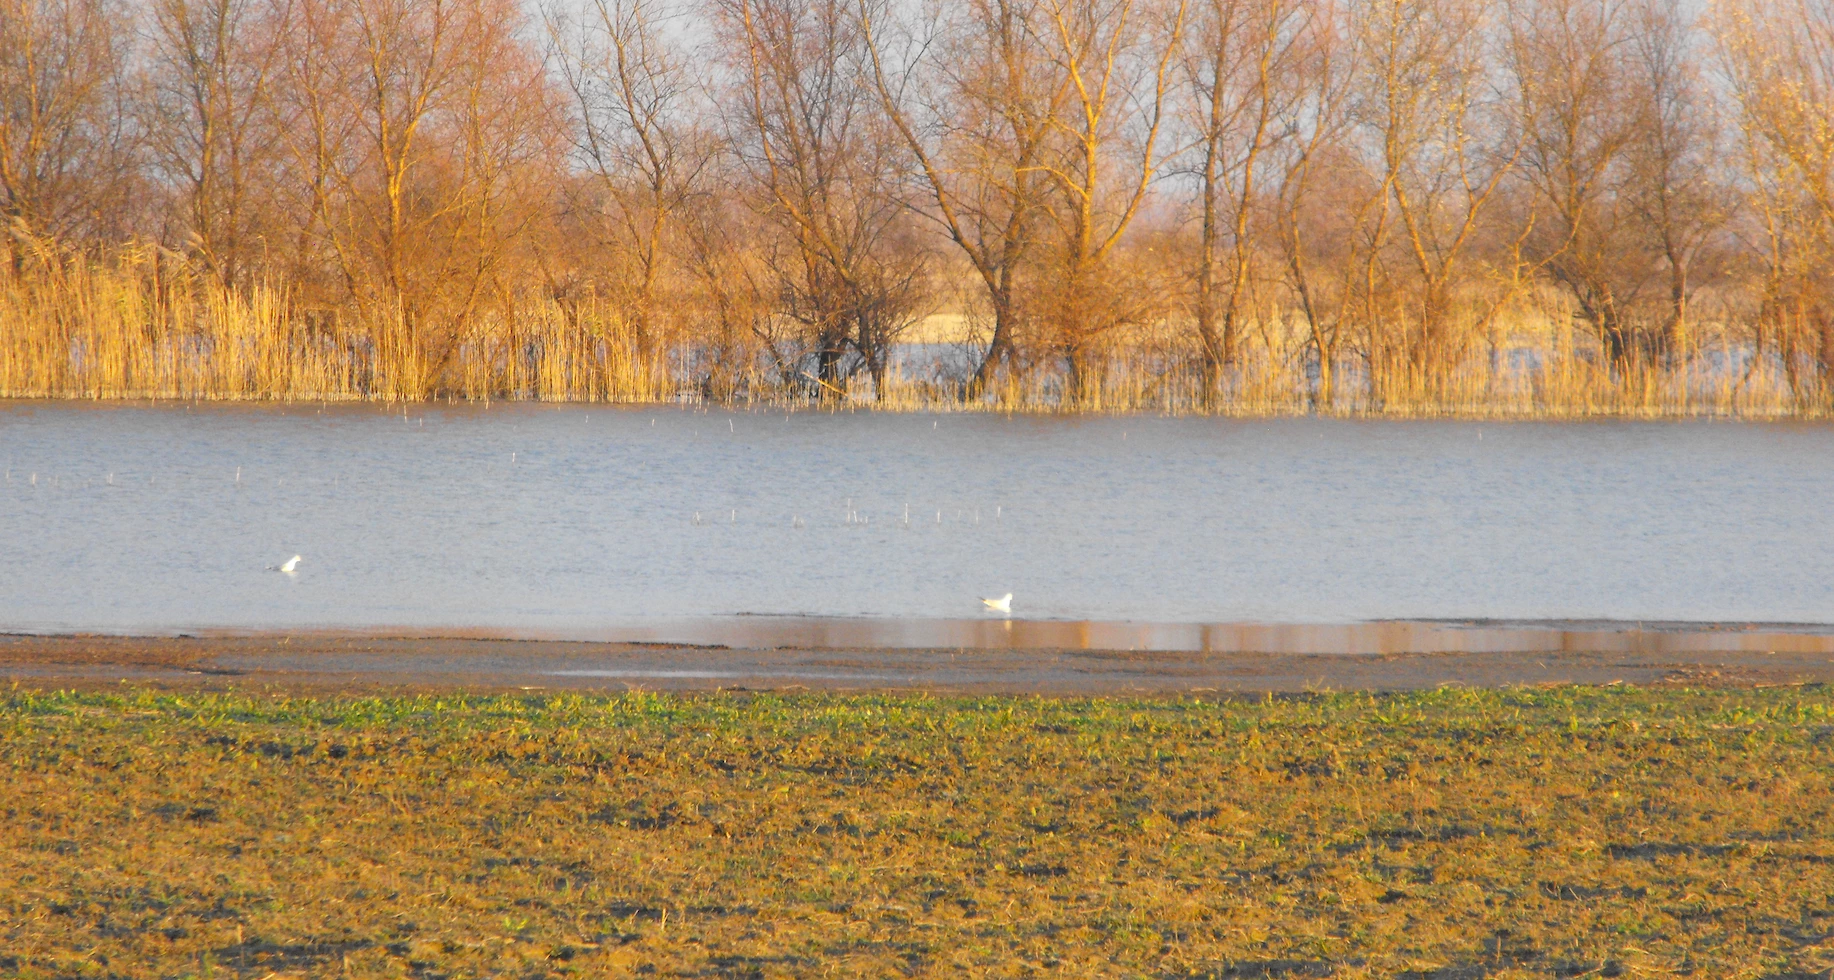 Danube Delta in December. Photo Credit: Thomas Hackl.